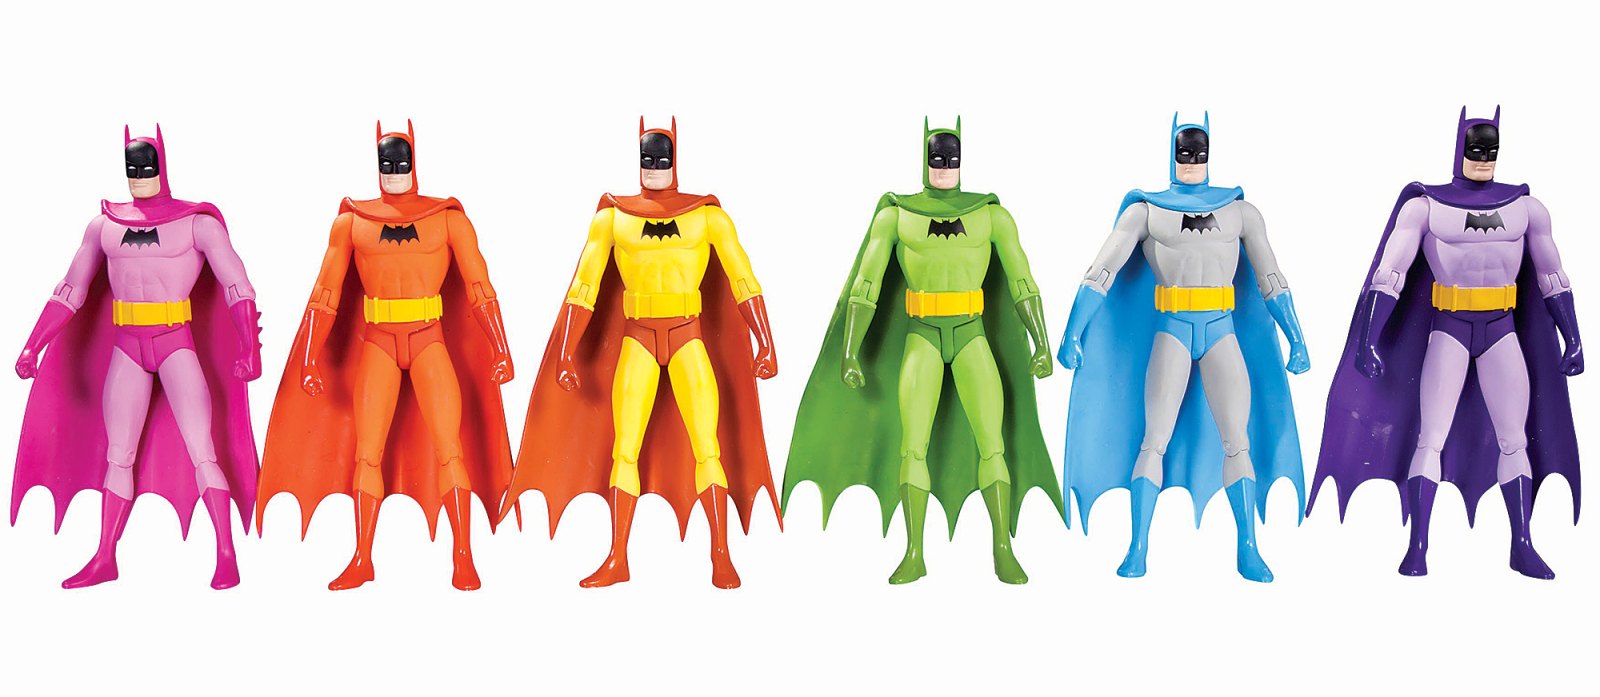 Batman figurines rainbow colors 80436790 16e1 4637 8cfa 68885b3dc1e7